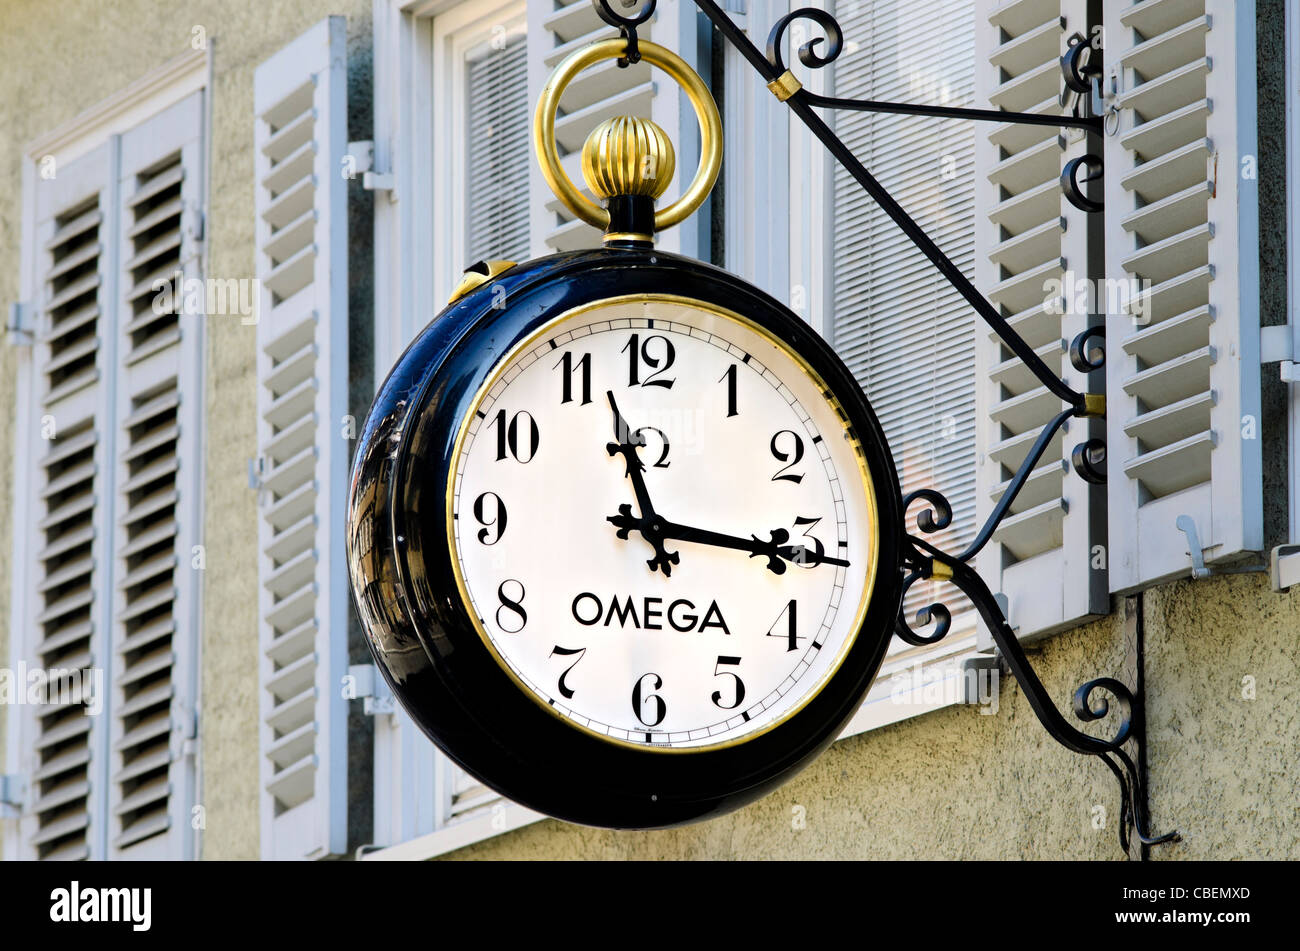 Store sign Omega watch, Tübingen, Germany, Europe Stock Photo